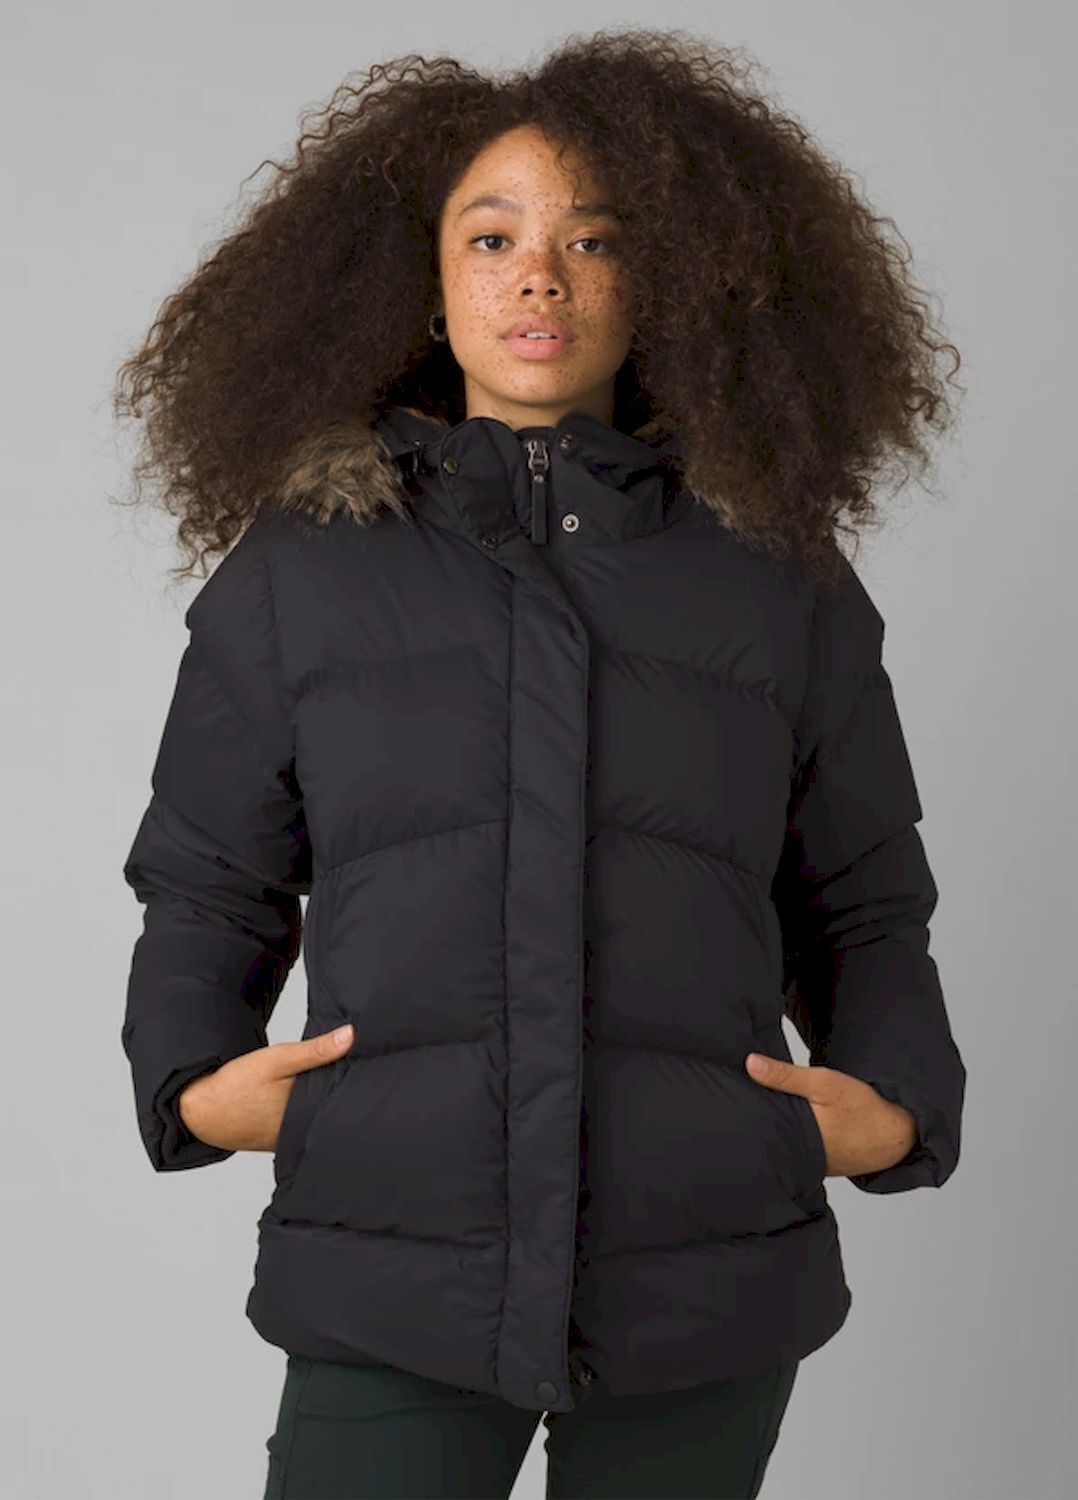 Prana Kromata Bomber Jacket - Winter jacket - Women's